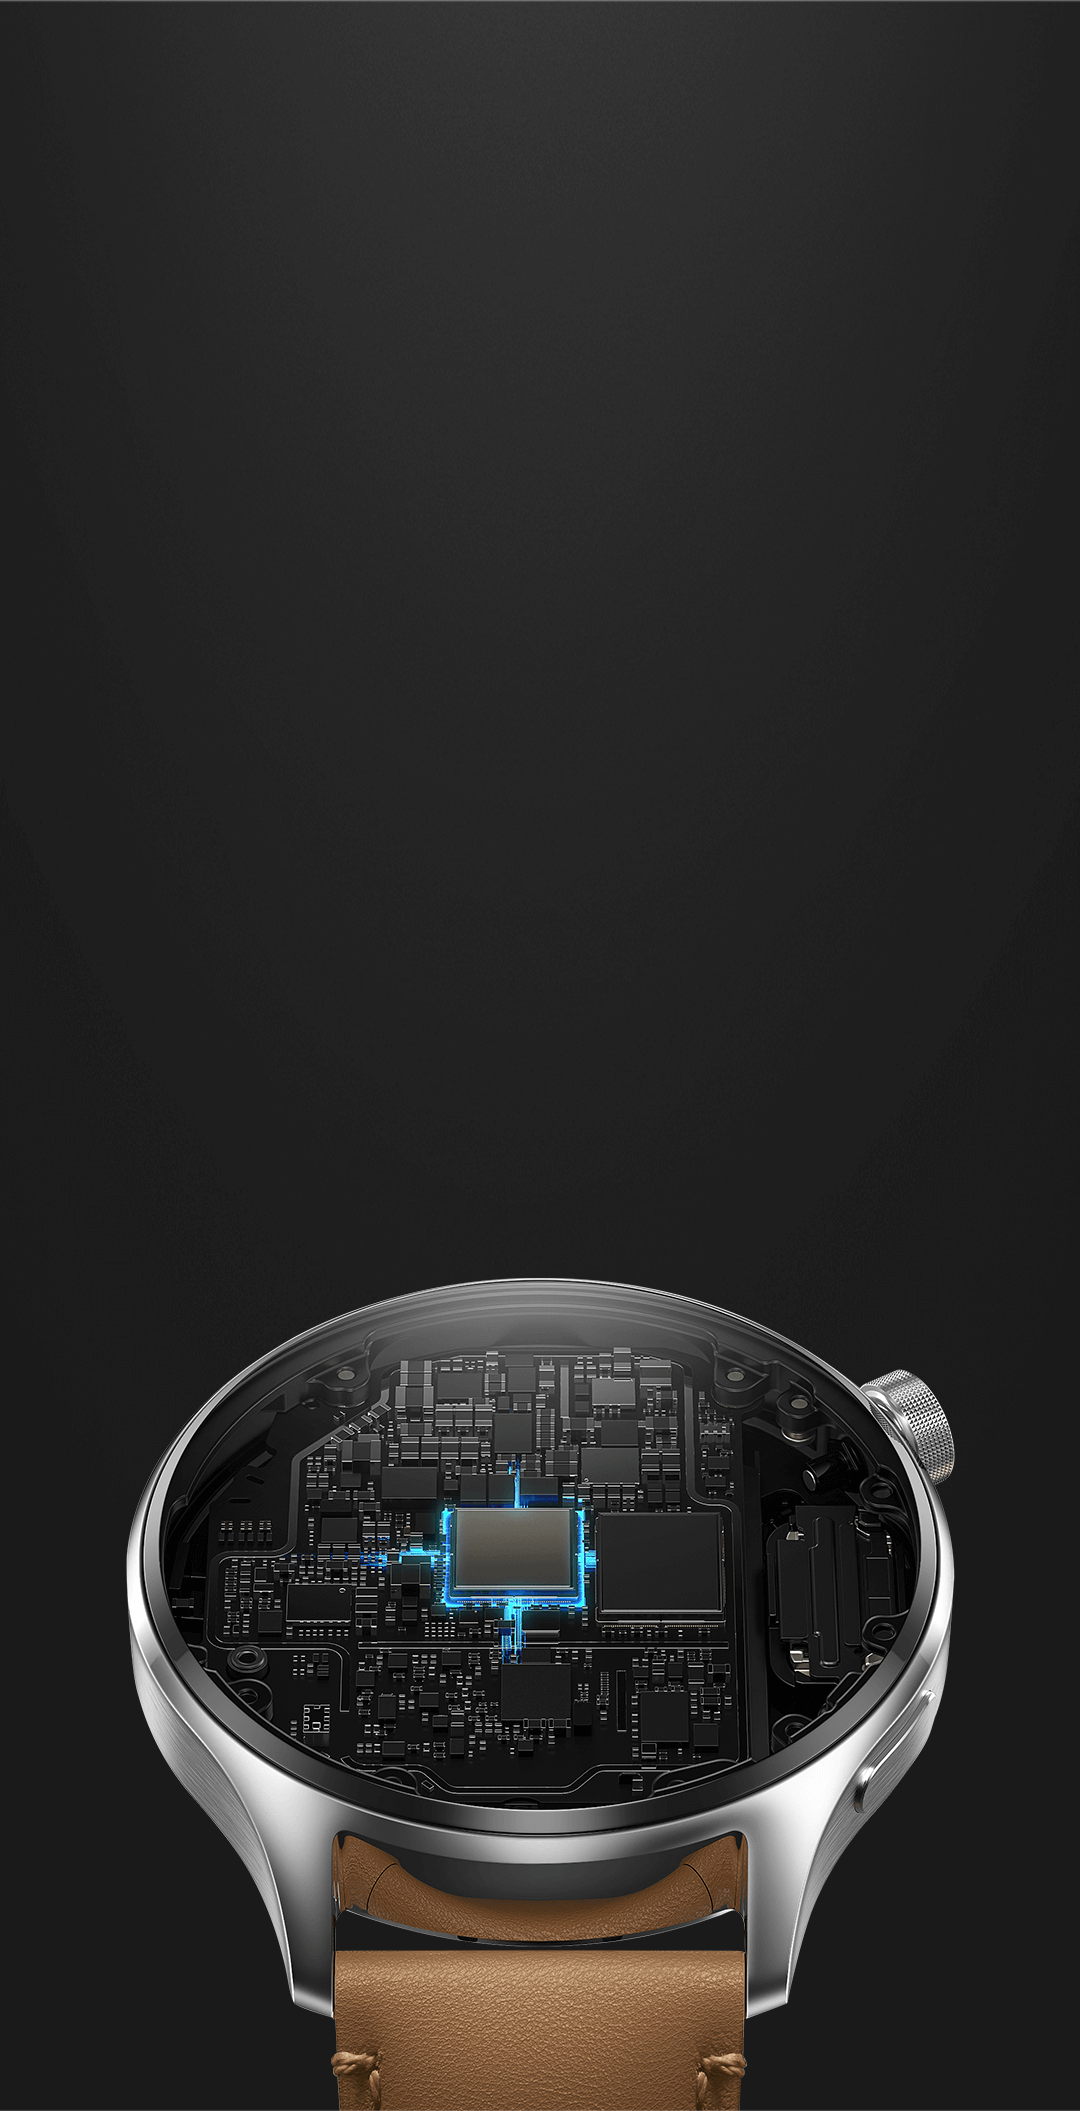 Xiaomi Watch S1 PRO 1.47-inch AMOLED display Waterproof (5ATM) By FedEx 